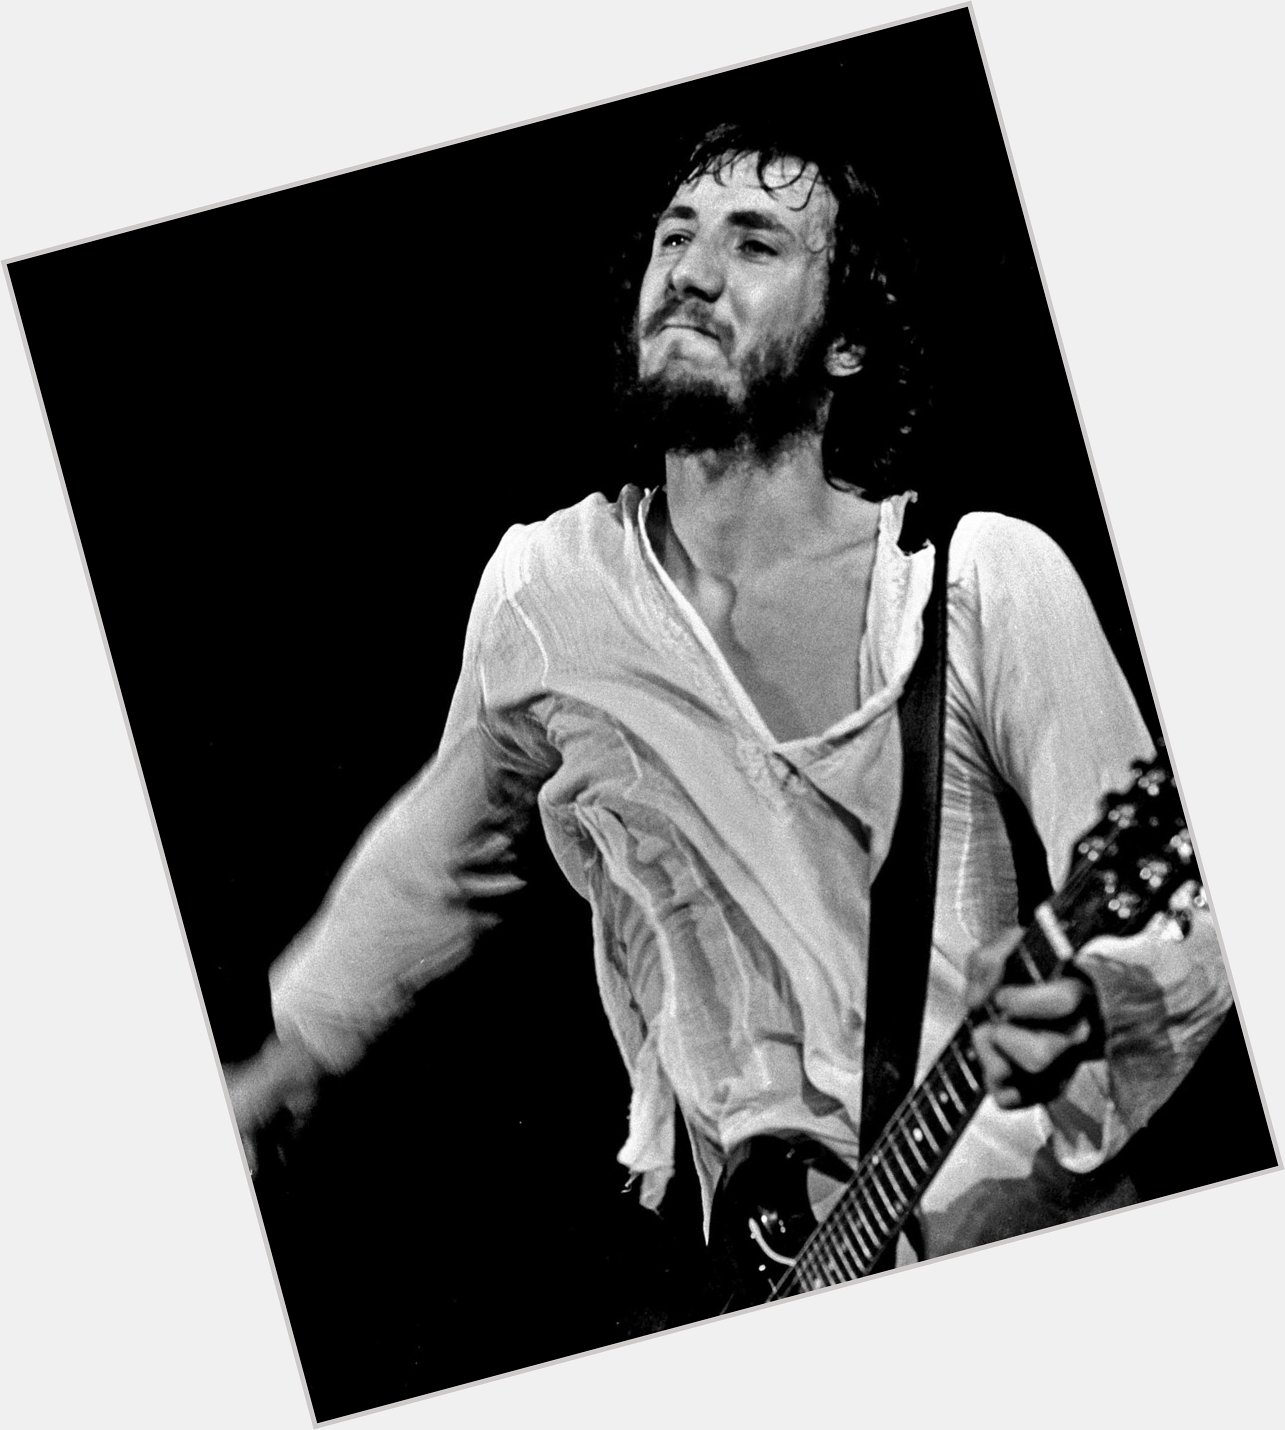 Happy Birthday to Pete Townshend, an true guitar legend. 